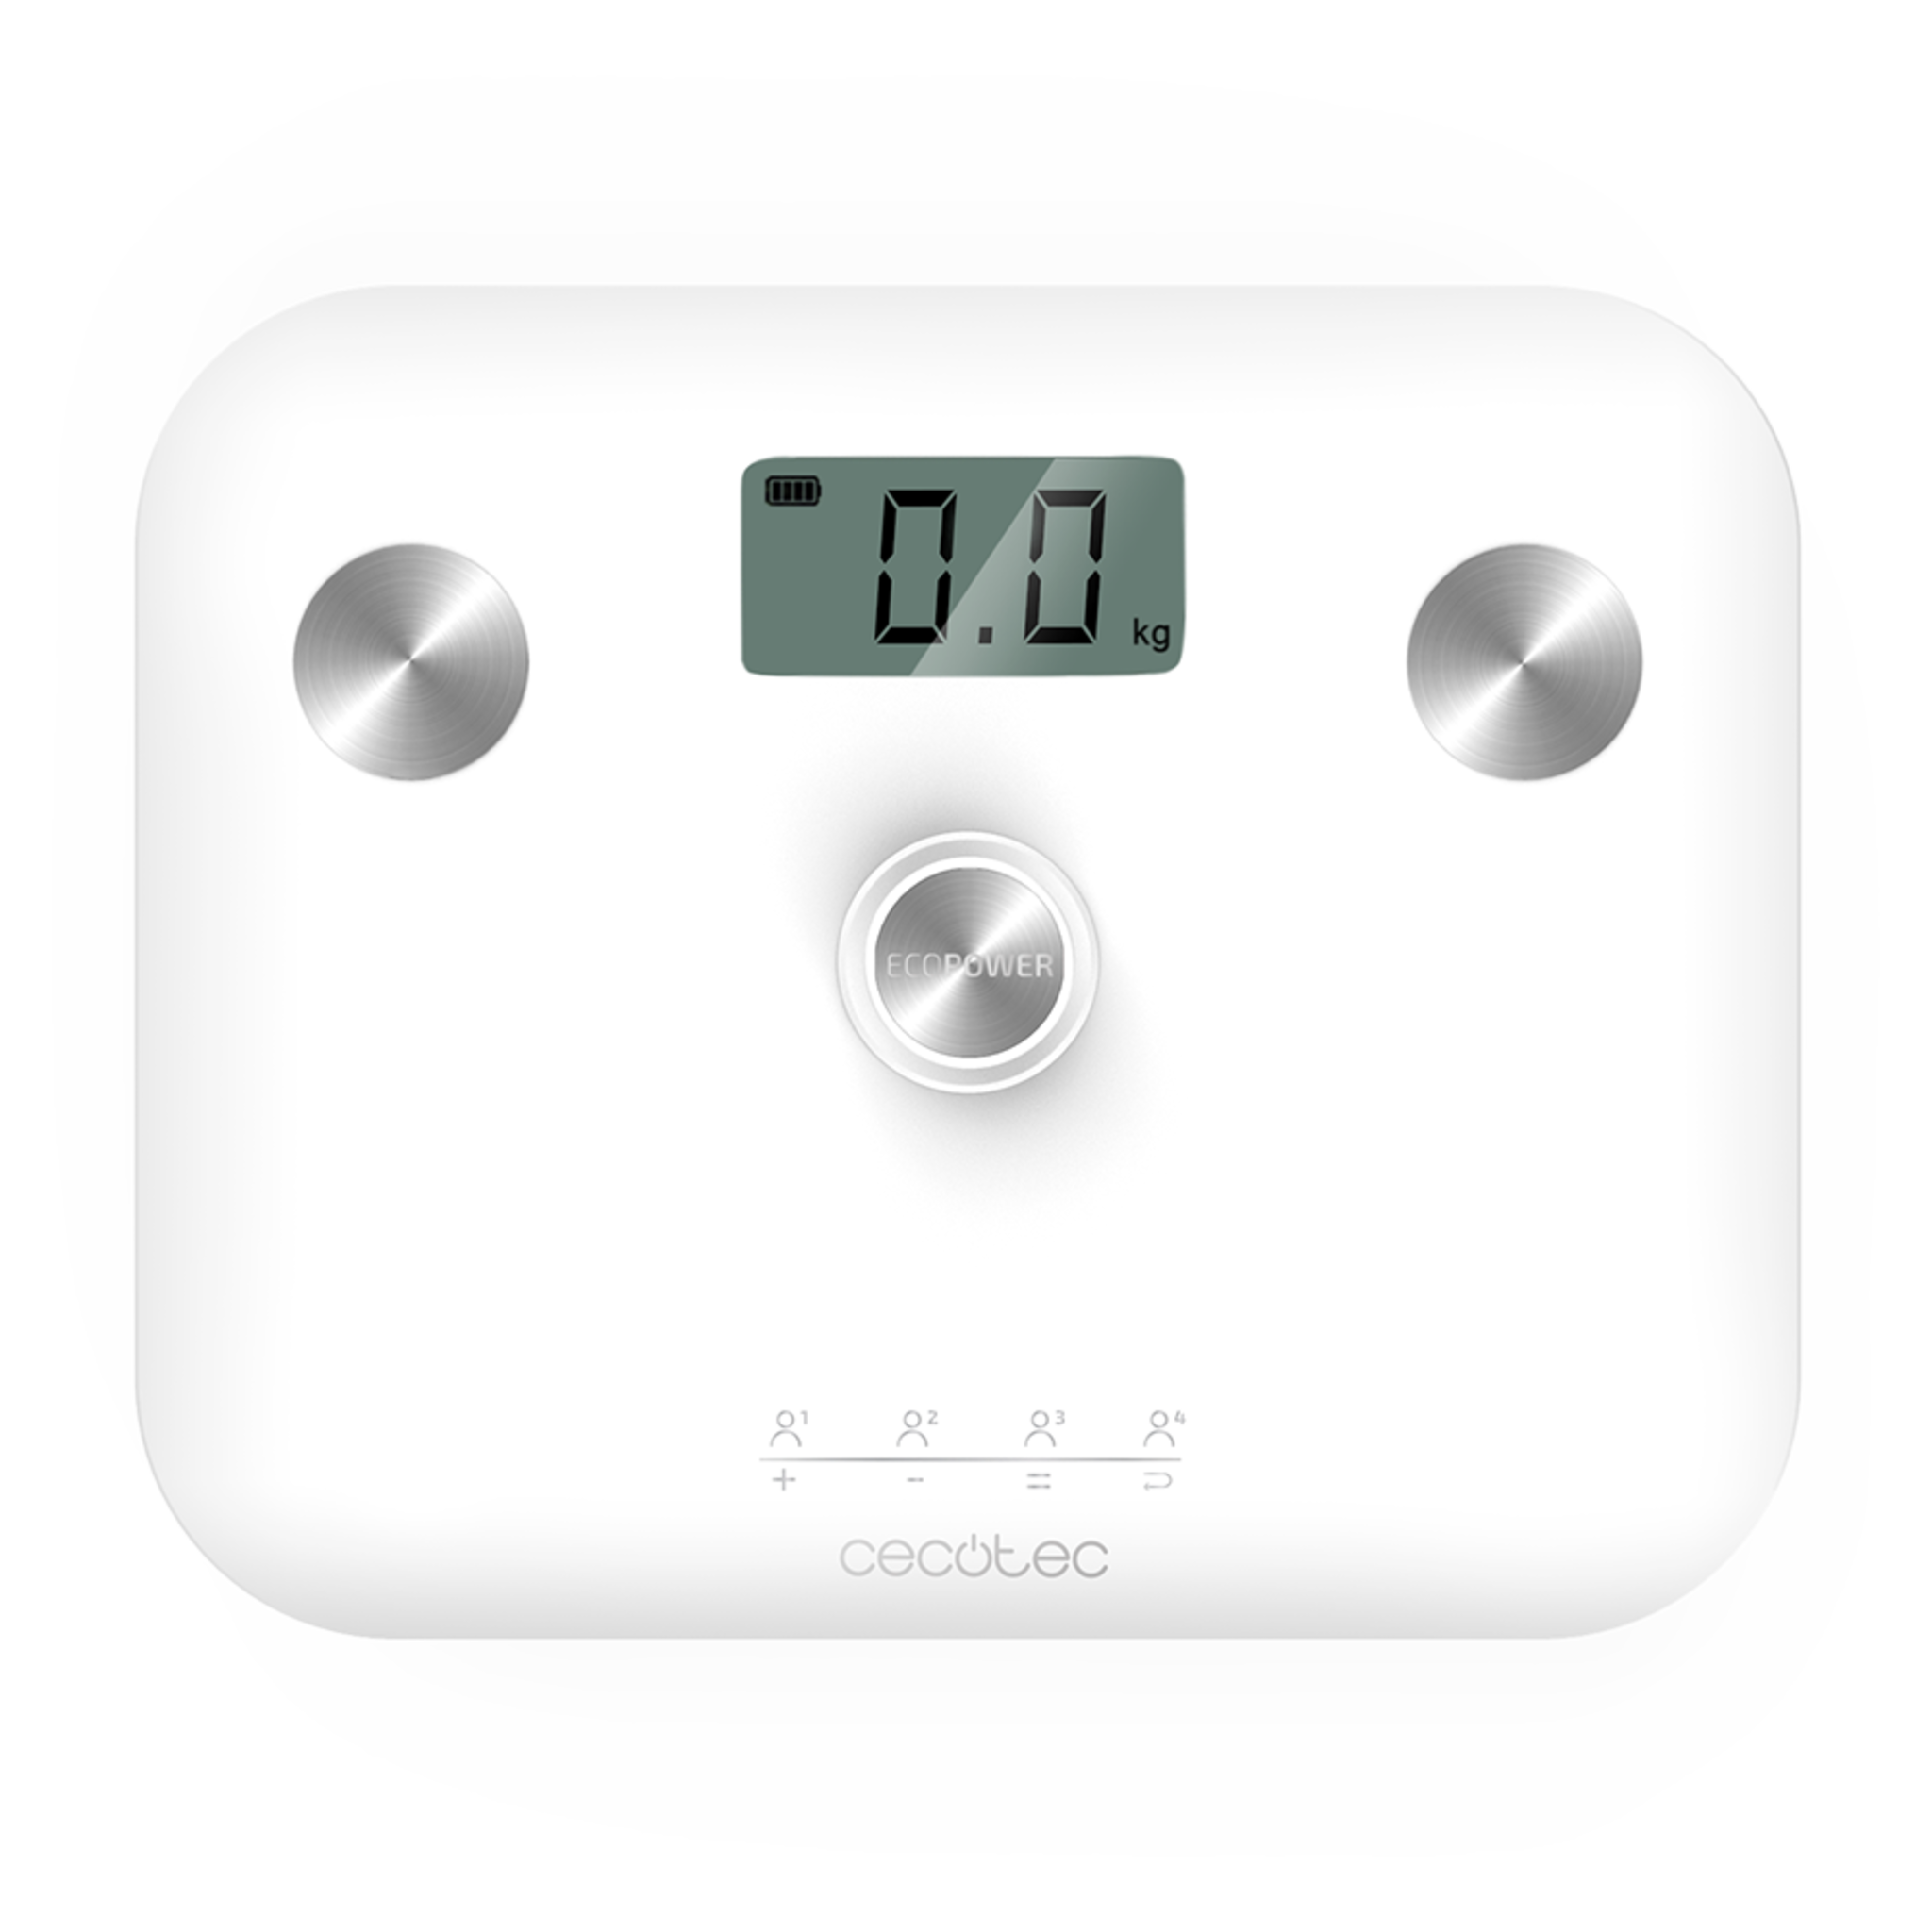 Báscula de baño Surface Precision EcoPower 10100 Full Healthy White. Con pulsador,Superficie de vidrio templado de alta seguridad, sensores de precisión, pantalla LCD